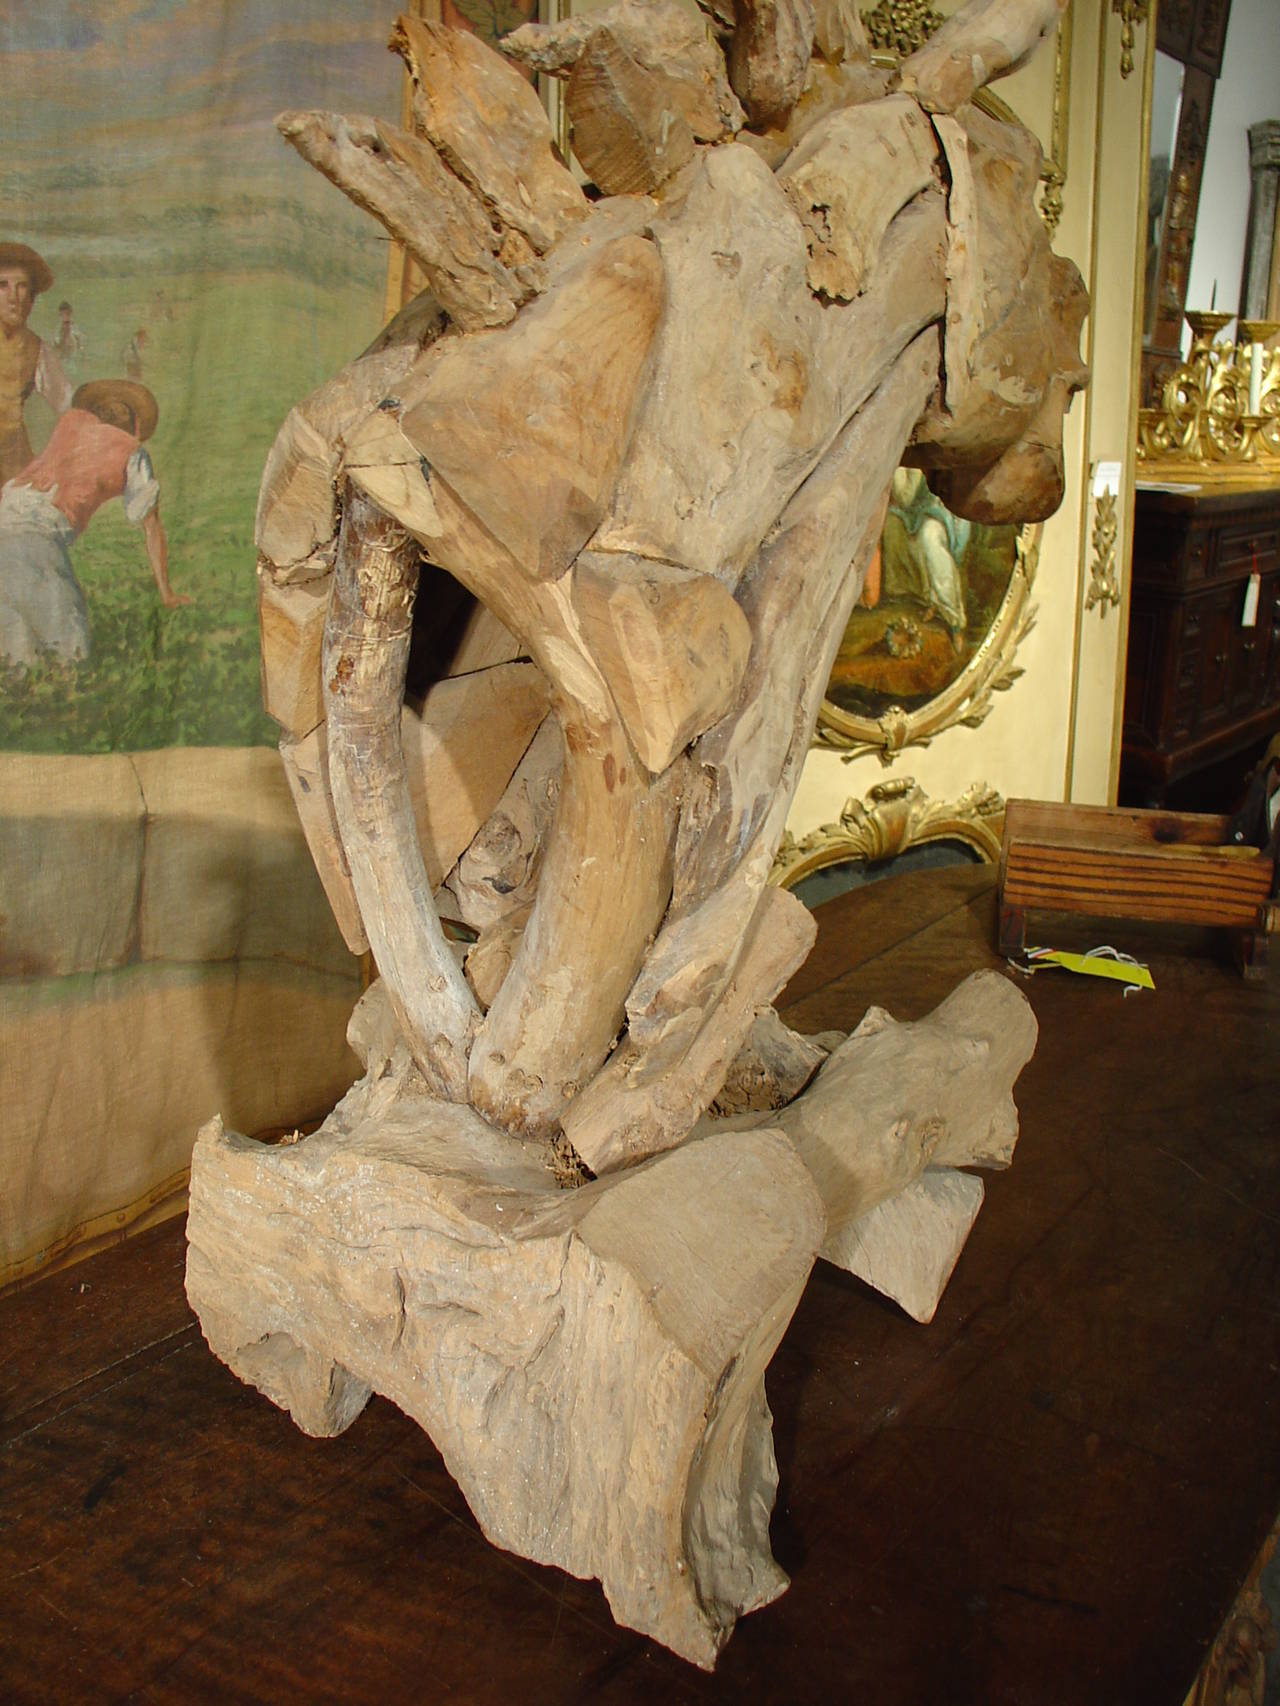 driftwood horse sculpture for sale uk